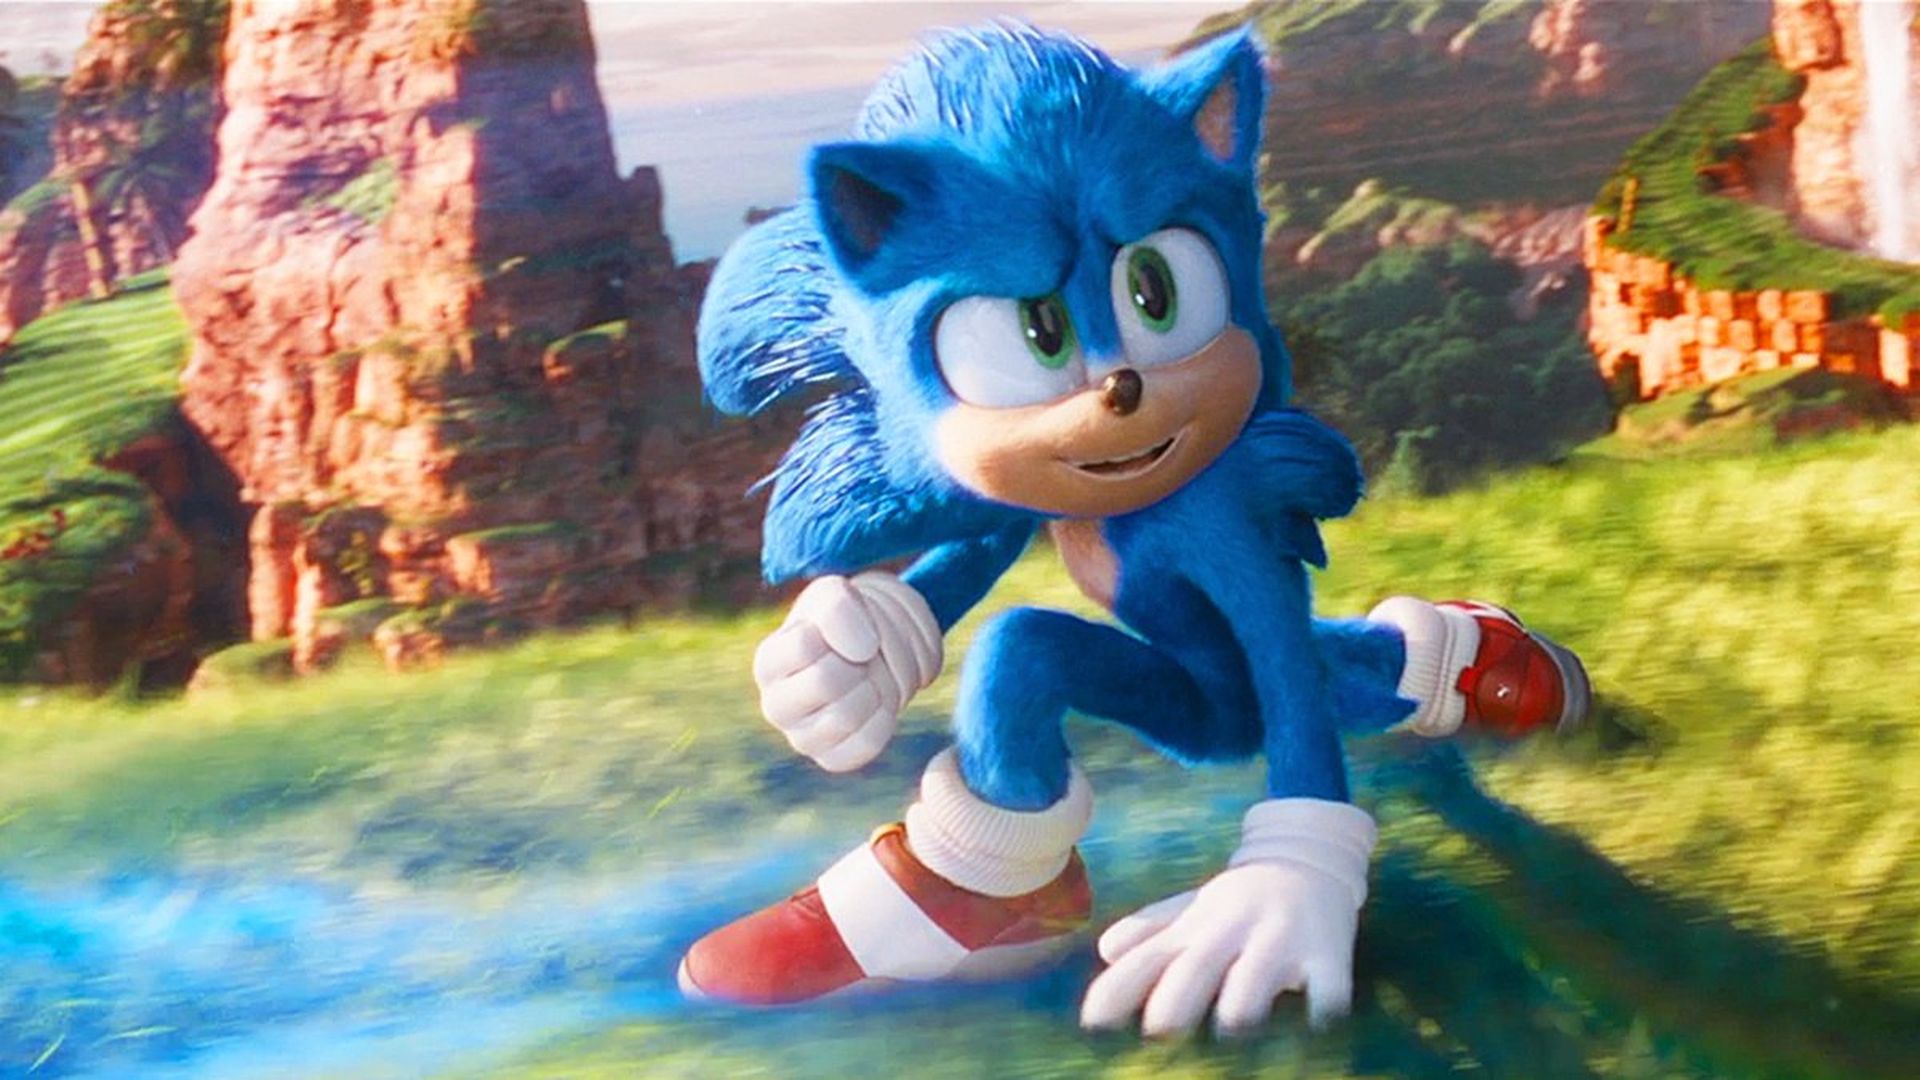 Chave Sônica - Sonic: O Filme (2020) #sonic #sonicthehedgehog